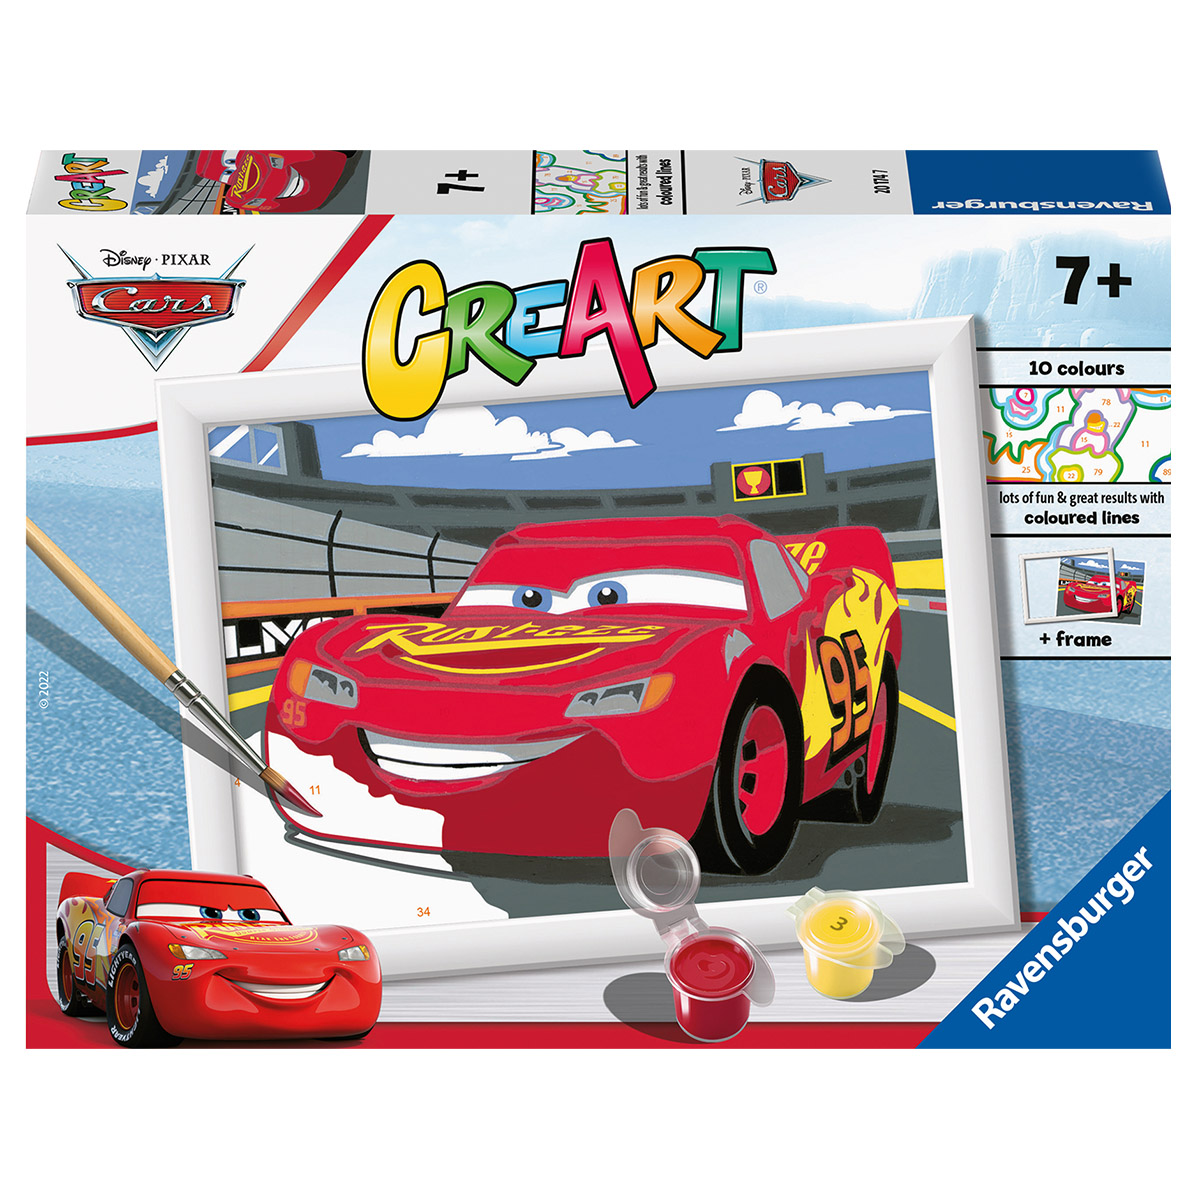 Creart Cars, Serie E, Kit per dipingere con i numeri - Creart, Disney Pixar